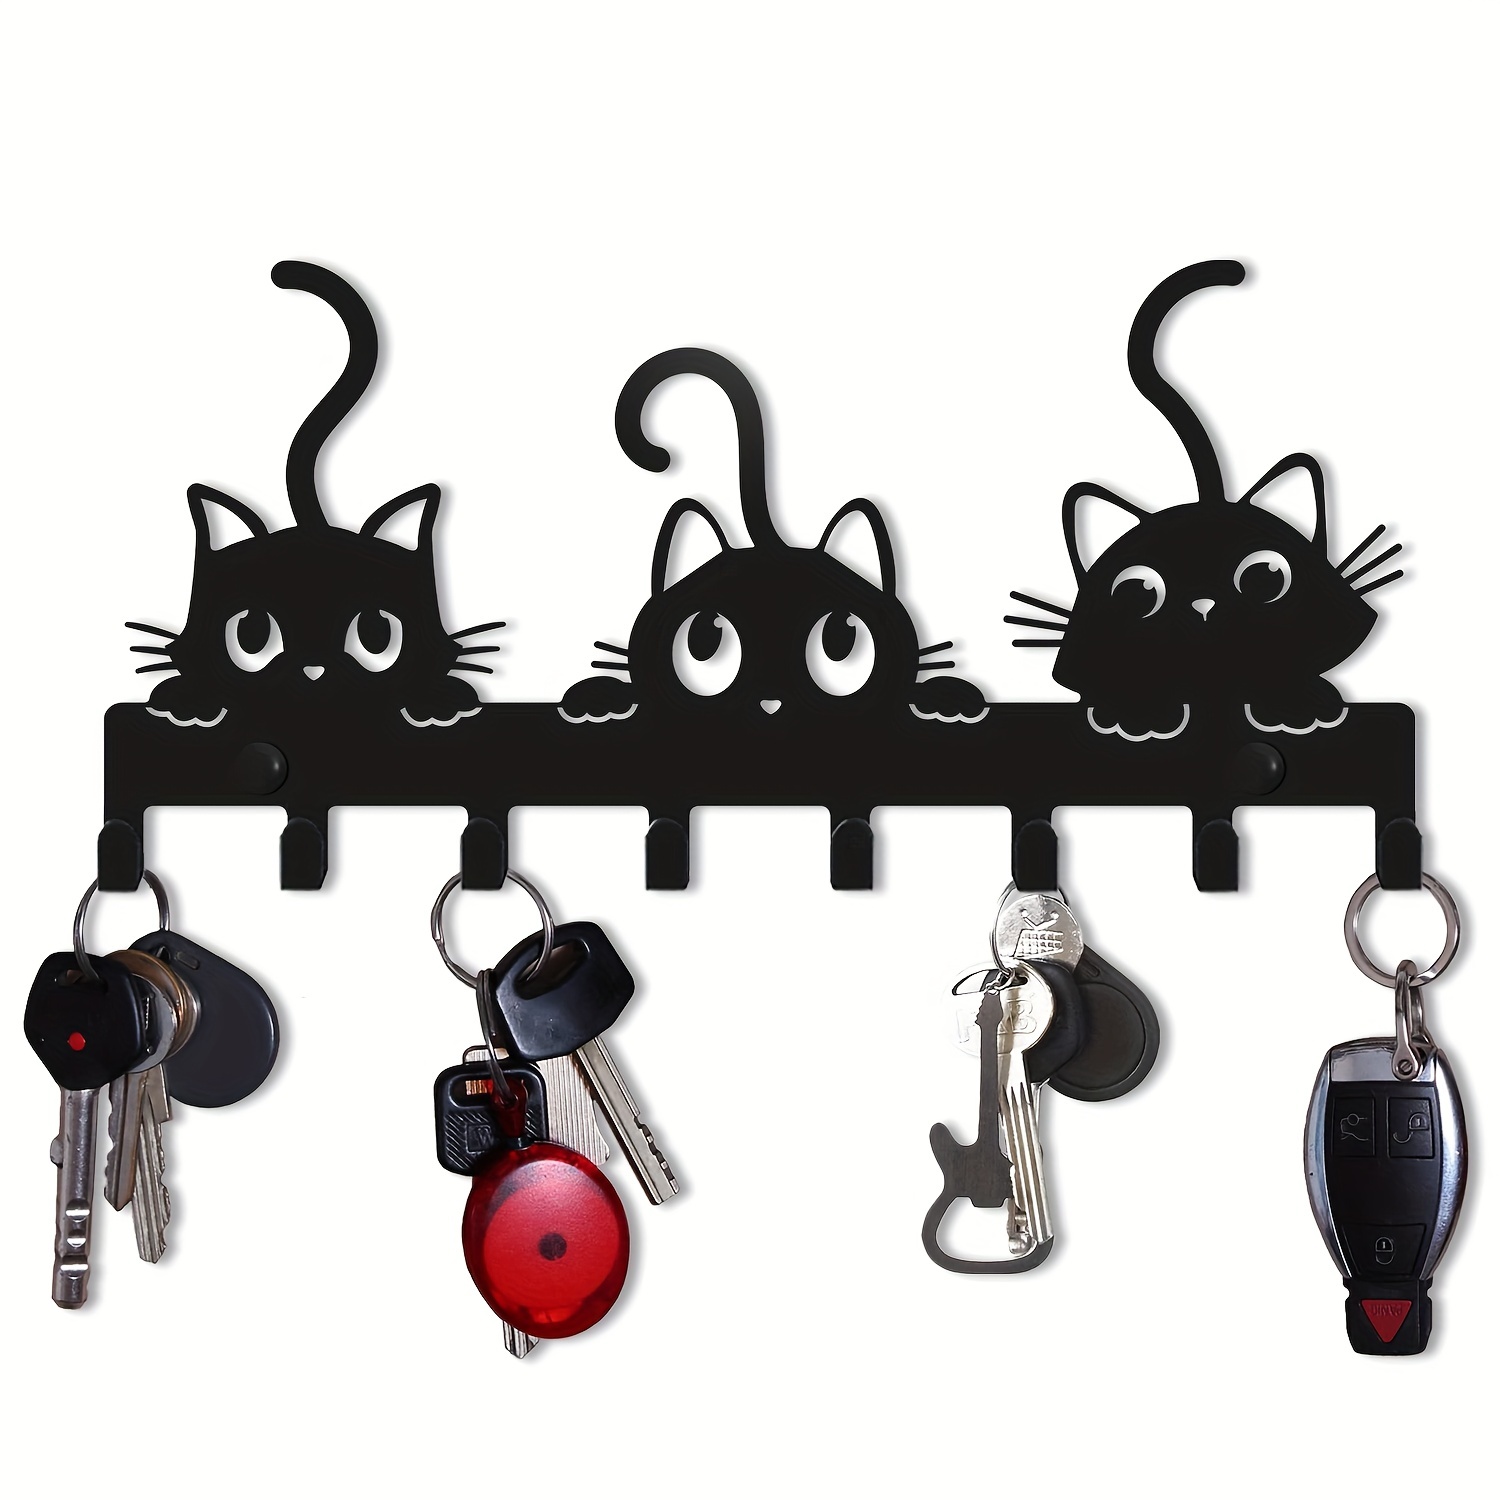 Household Cartoon Cat Decorative Hooks Key Holder Wall Mounted